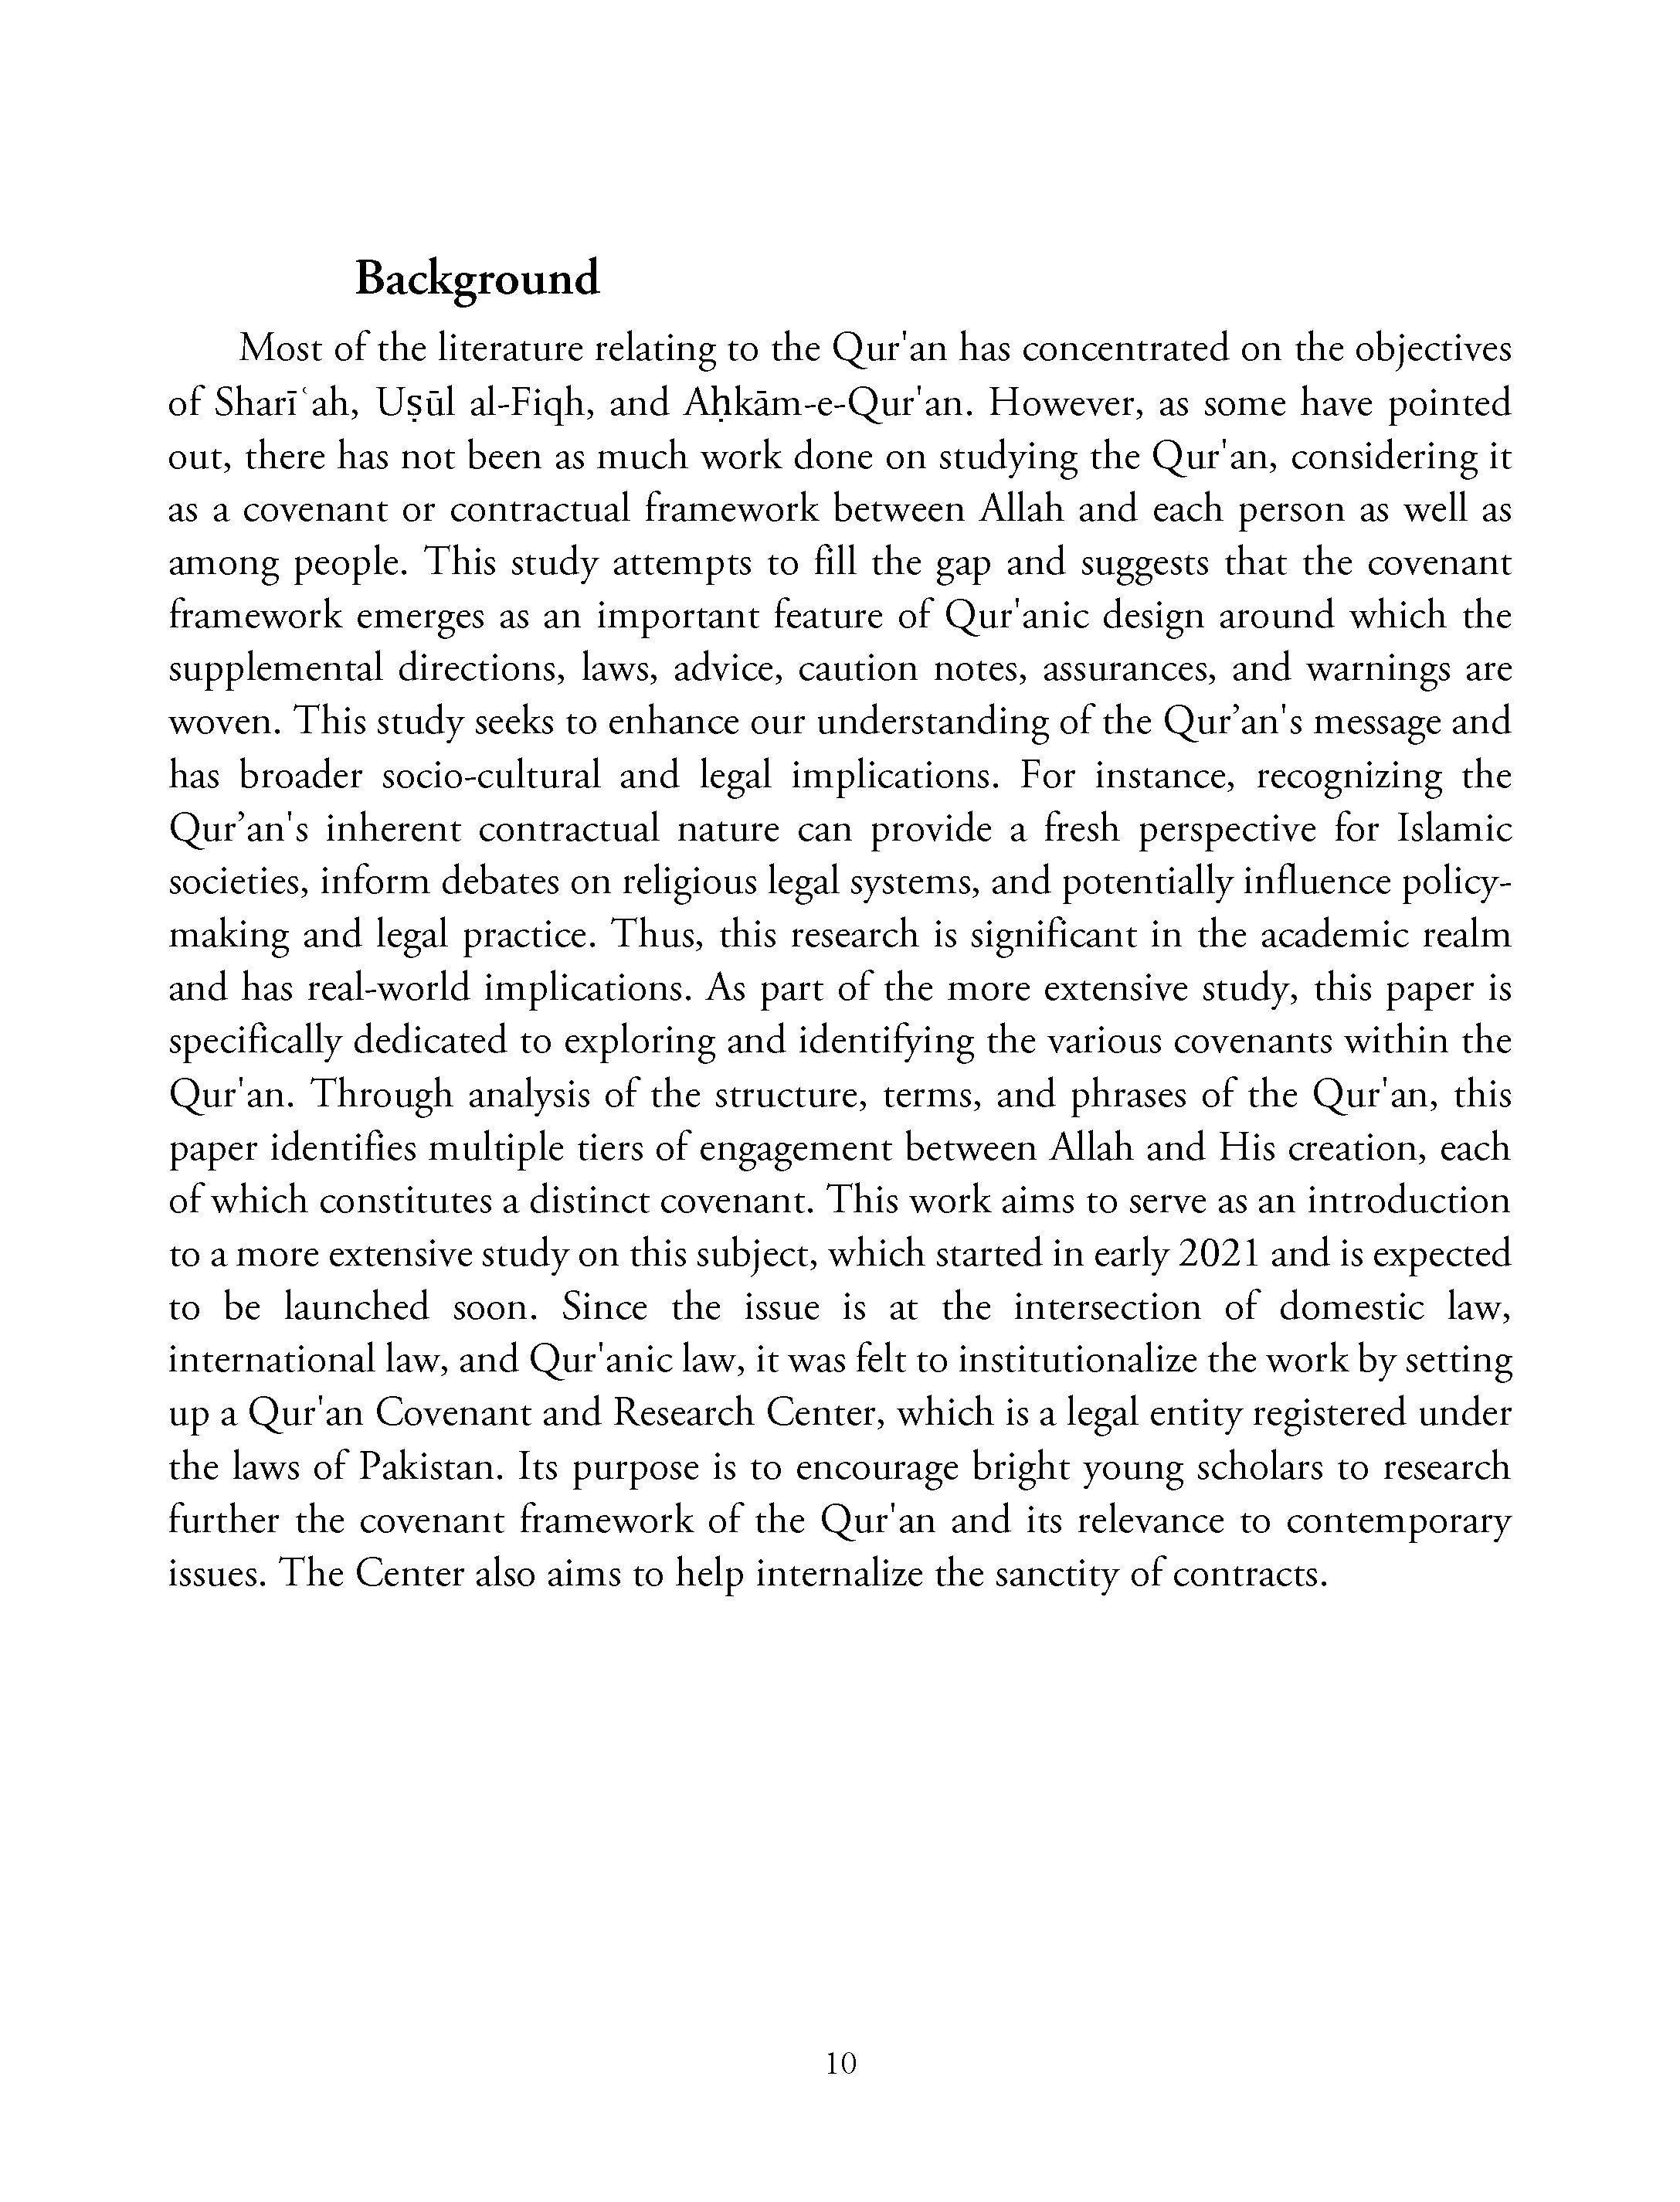 Qur'anic Covenants: An Introduction - Ahmer Bilal Soofi